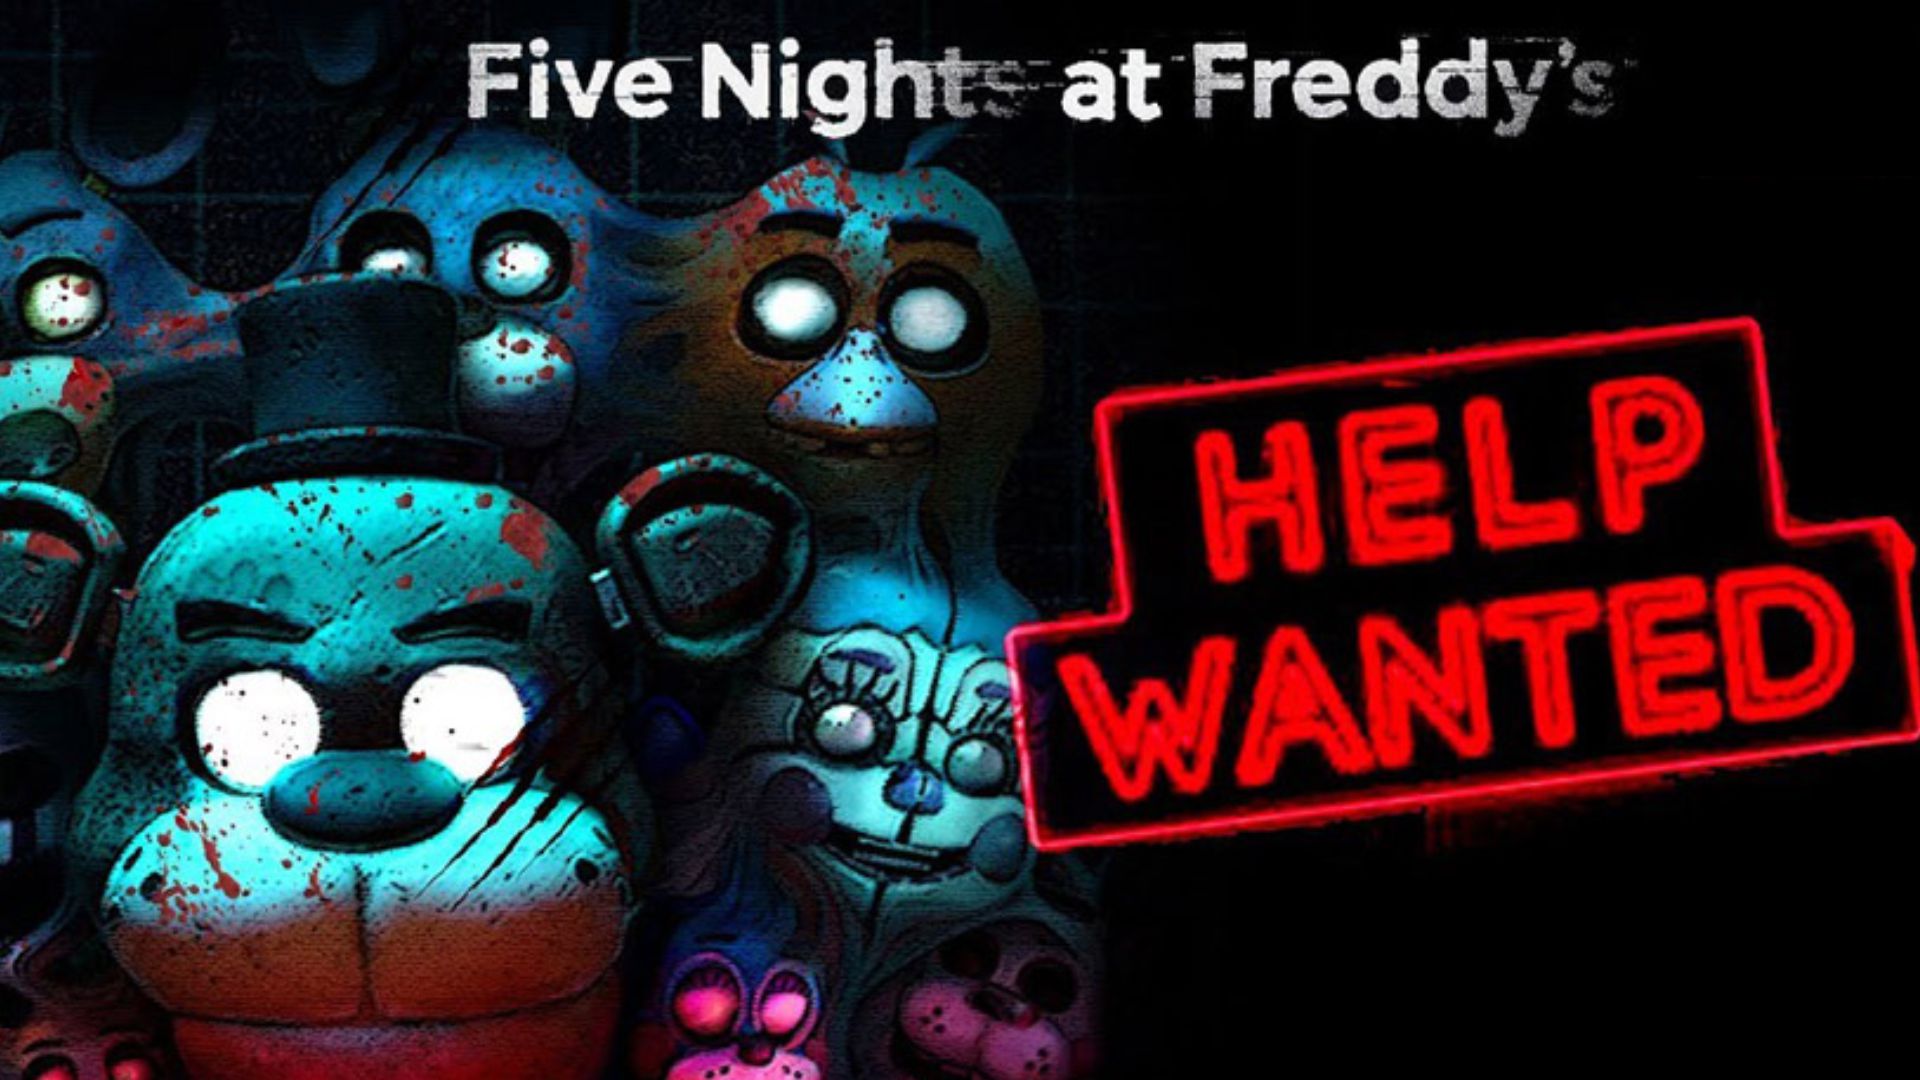 Five Nights At Freddy's: Security Breach é anunciado com teaser